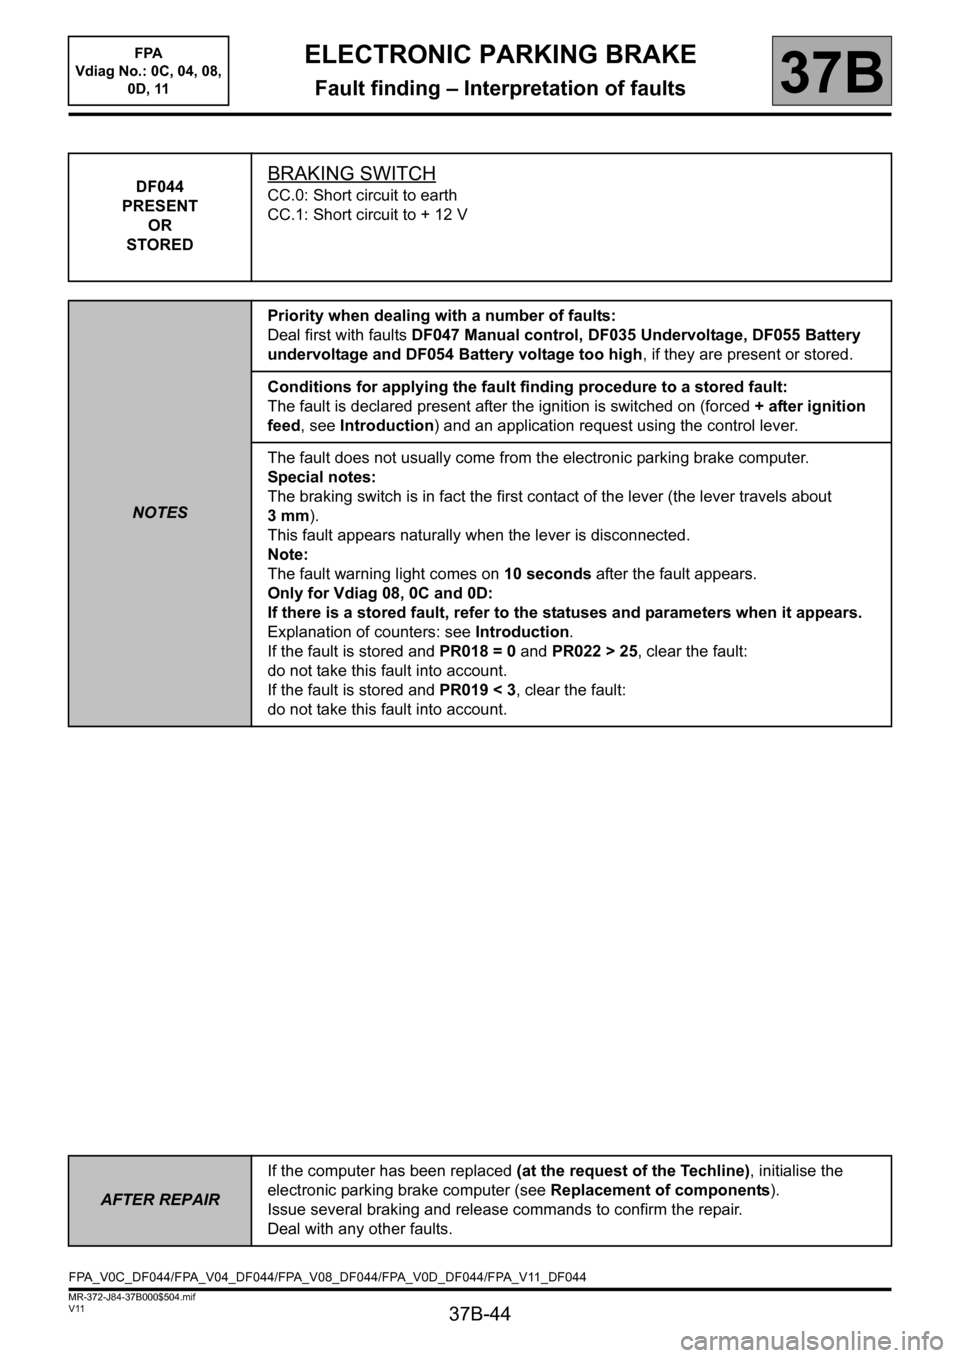 RENAULT SCENIC 2013 J95 / 3.G Electronic Parking Brake Service Manual 37B-44
MR-372-J84-37B000$504.mif
V11
ELECTRONIC PARKING BRAKE
Fault finding – Interpretation of faults
FPA  
Vdiag No.: 0C, 04, 08, 
0D, 11
37B
DF044
PRESENT
OR
STOREDBRAKING SWITCH
CC.0: Short circ